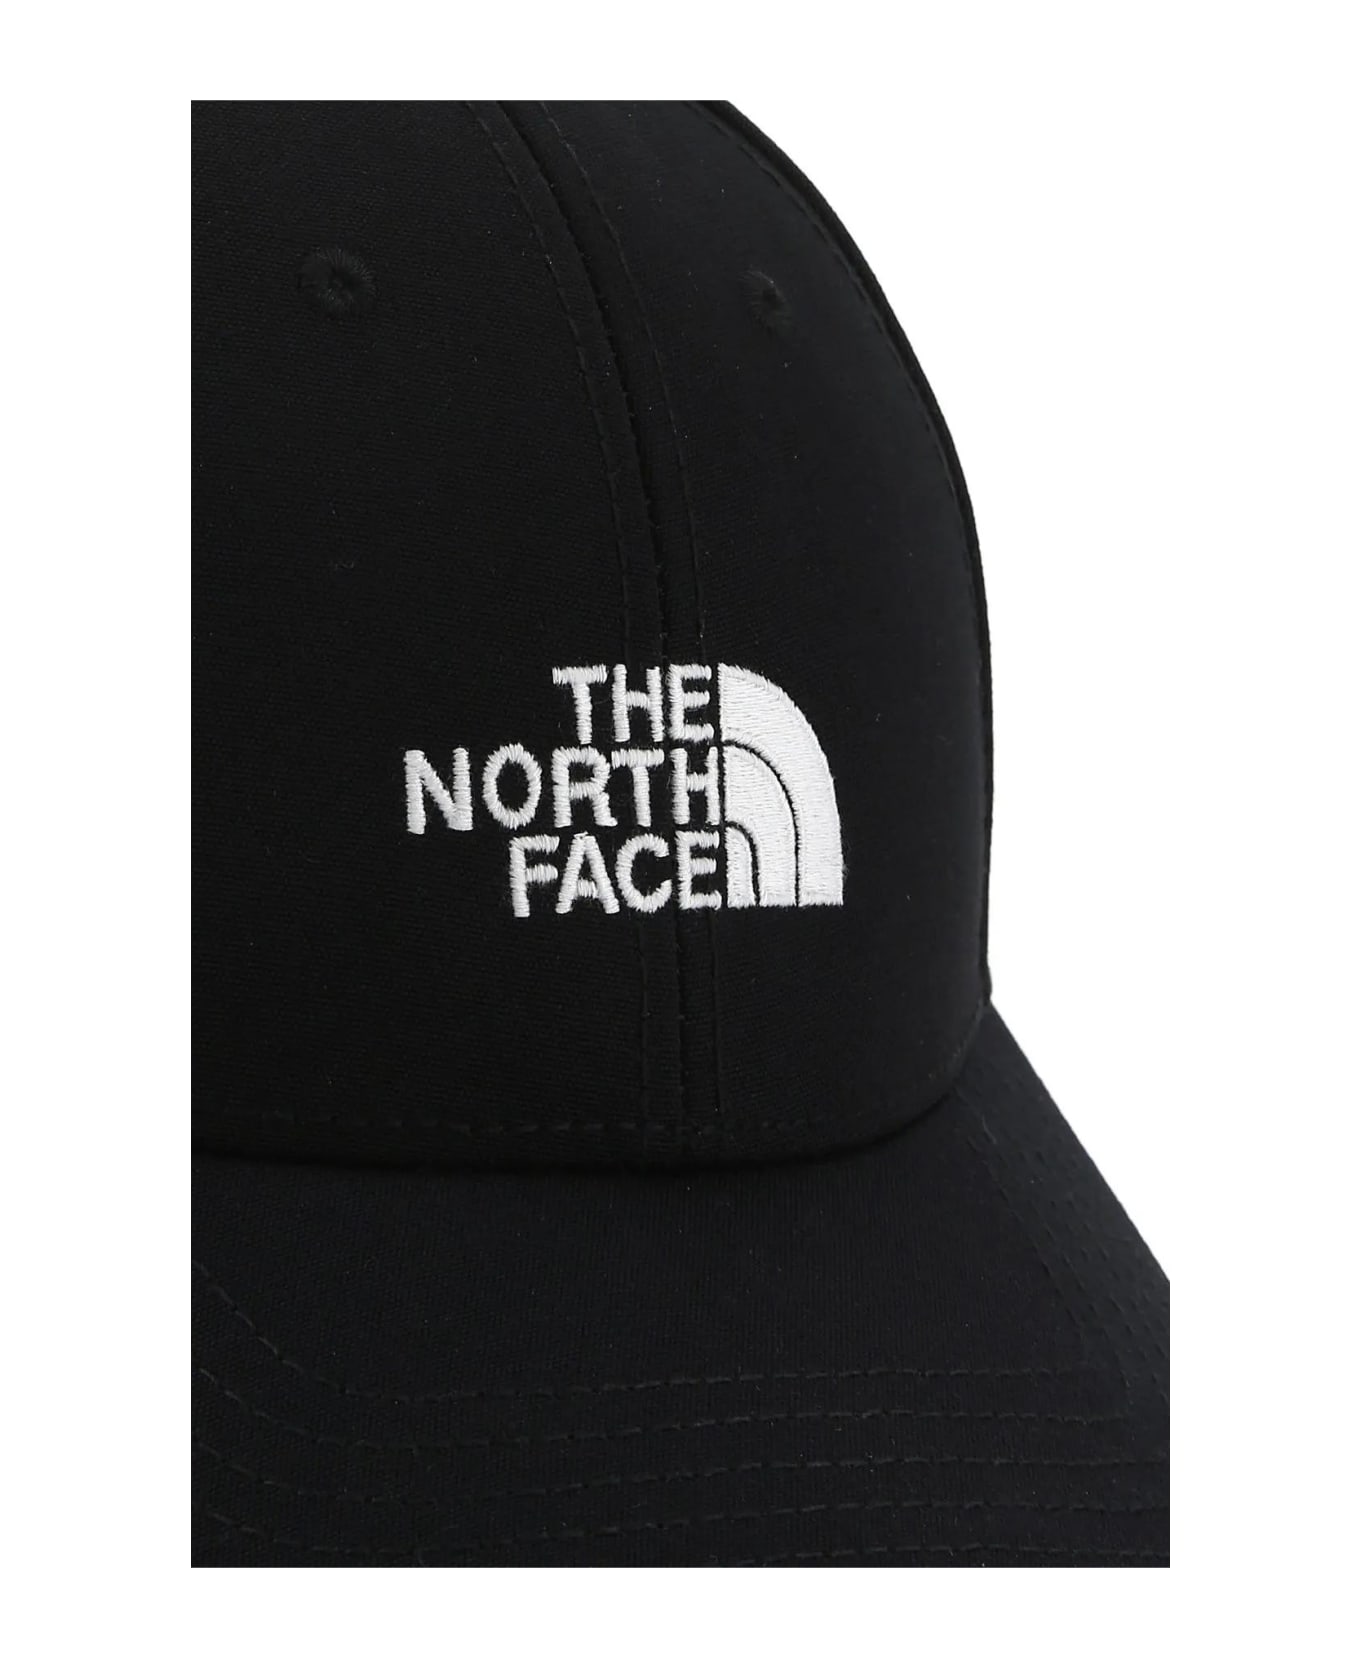 The North Face Black Polyester Baseball Cap - Black